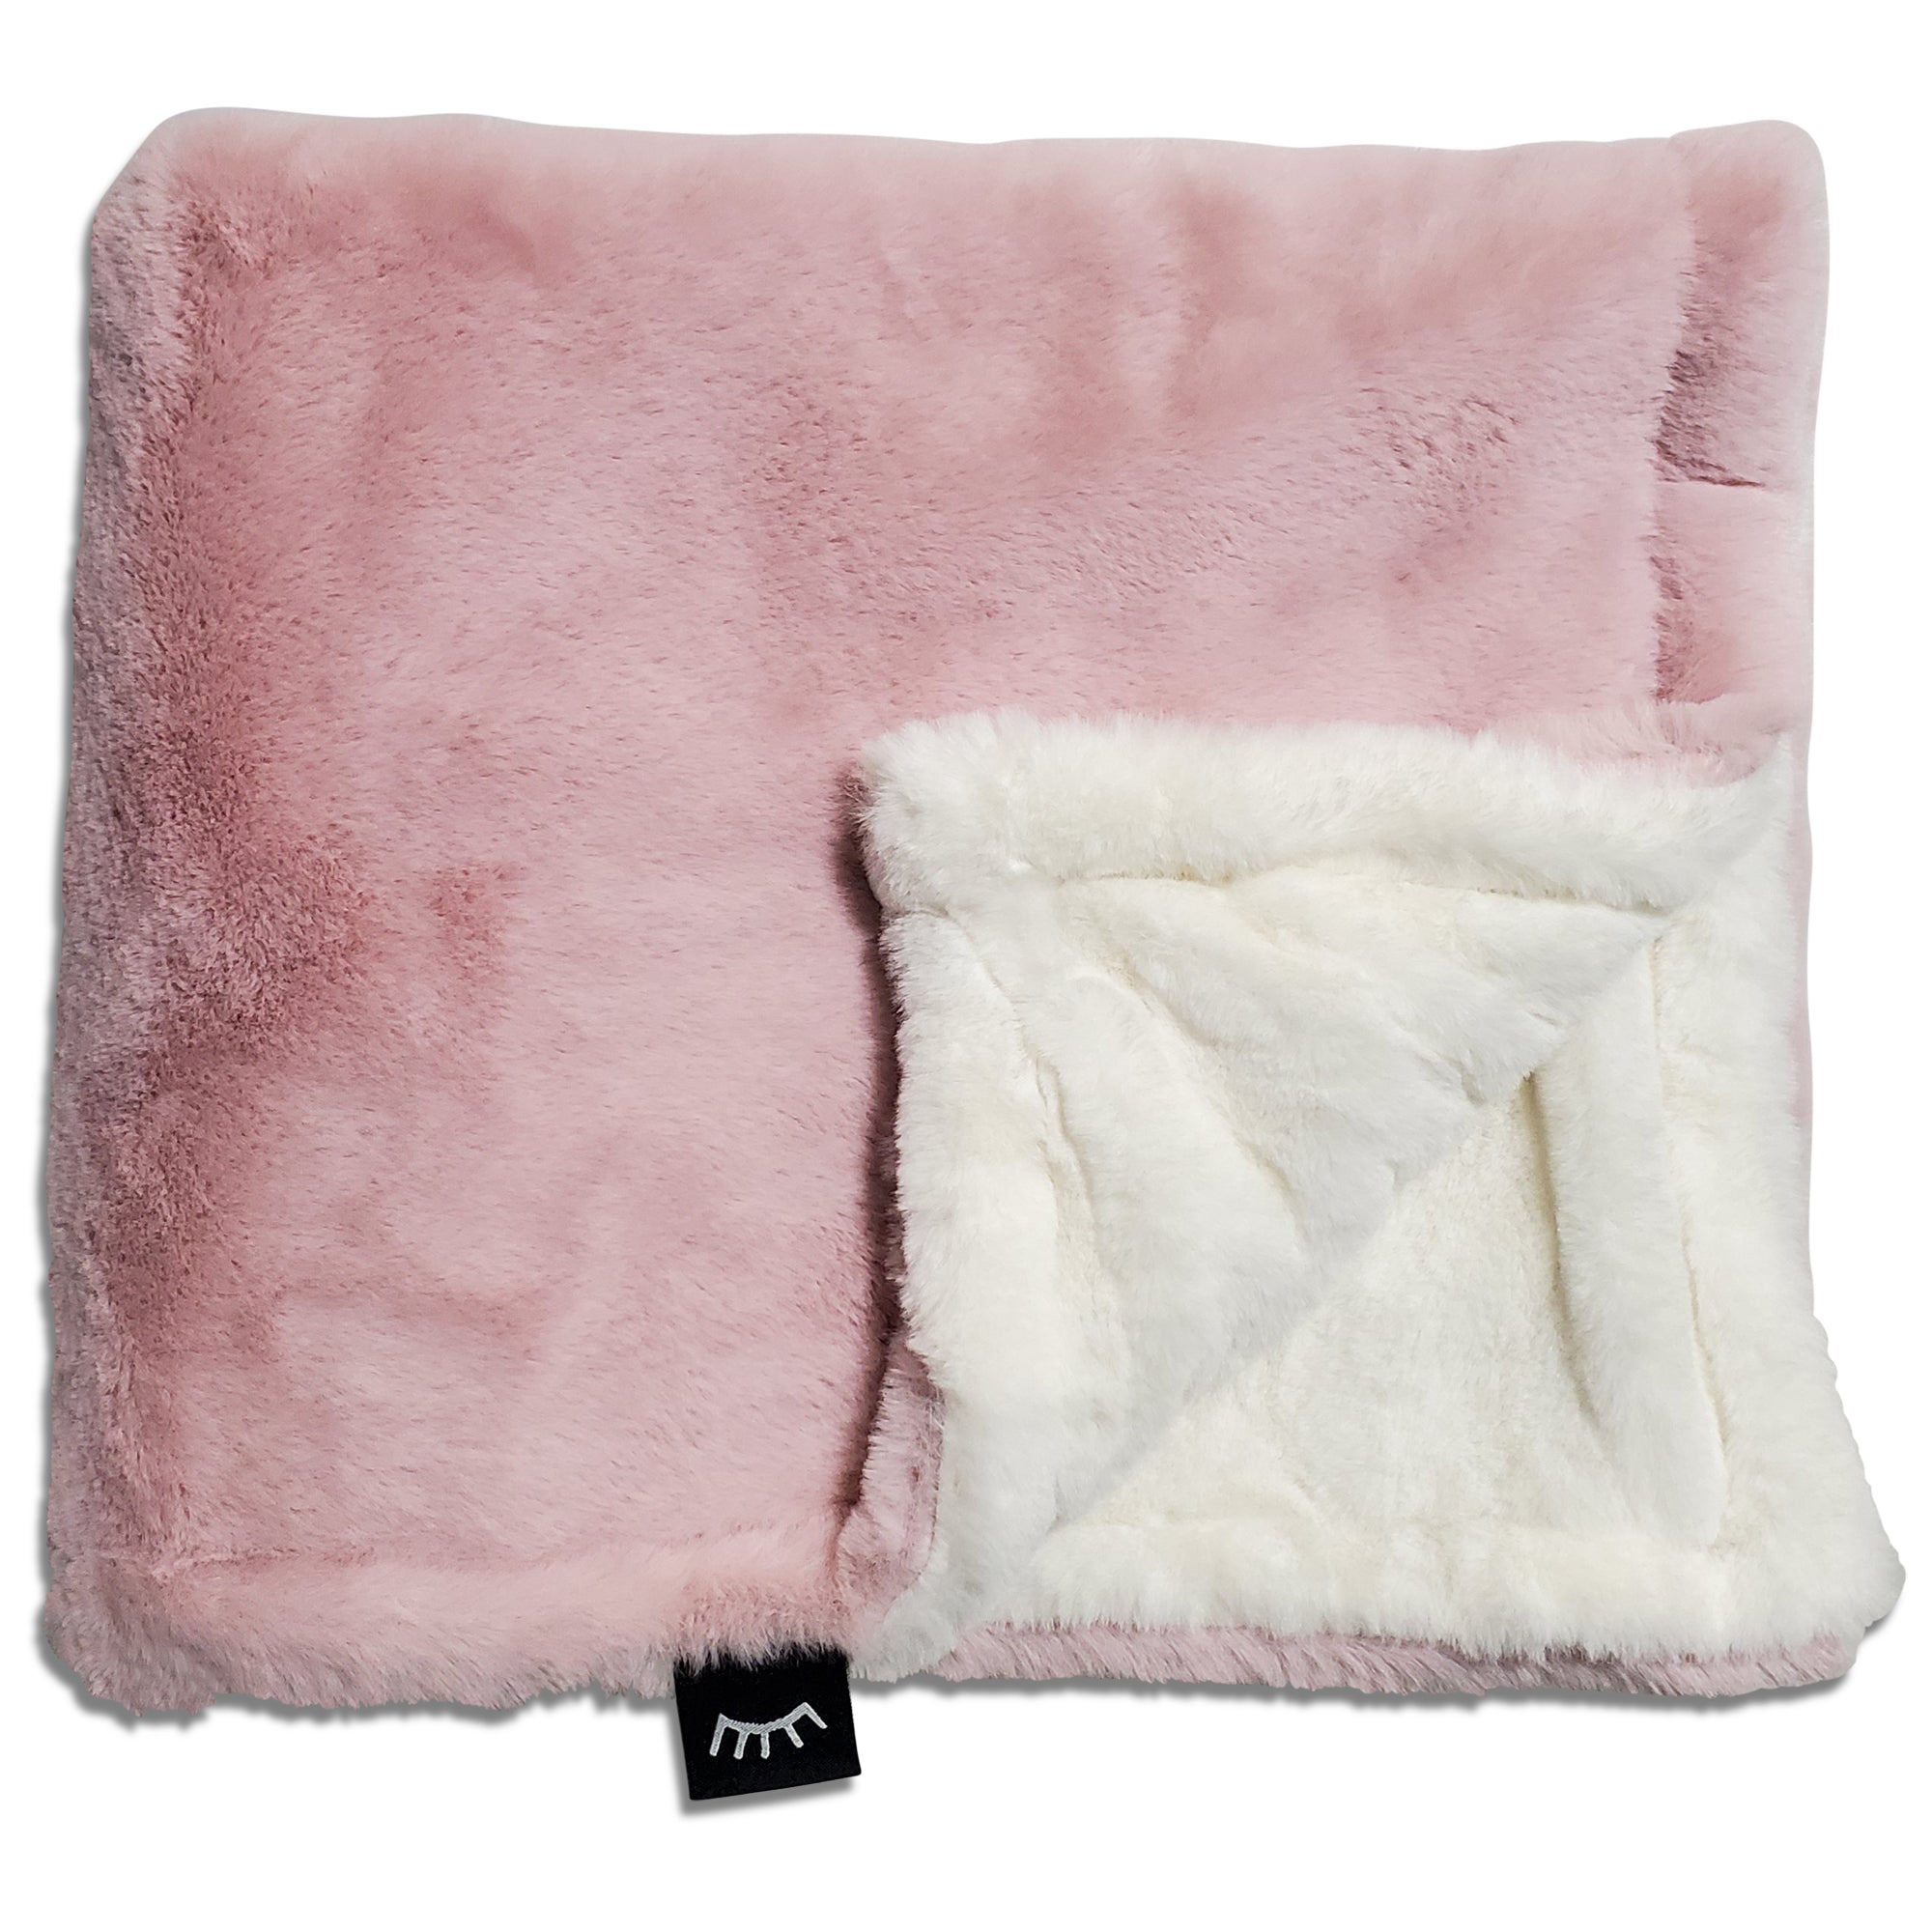 Fluffy Minky Blanket